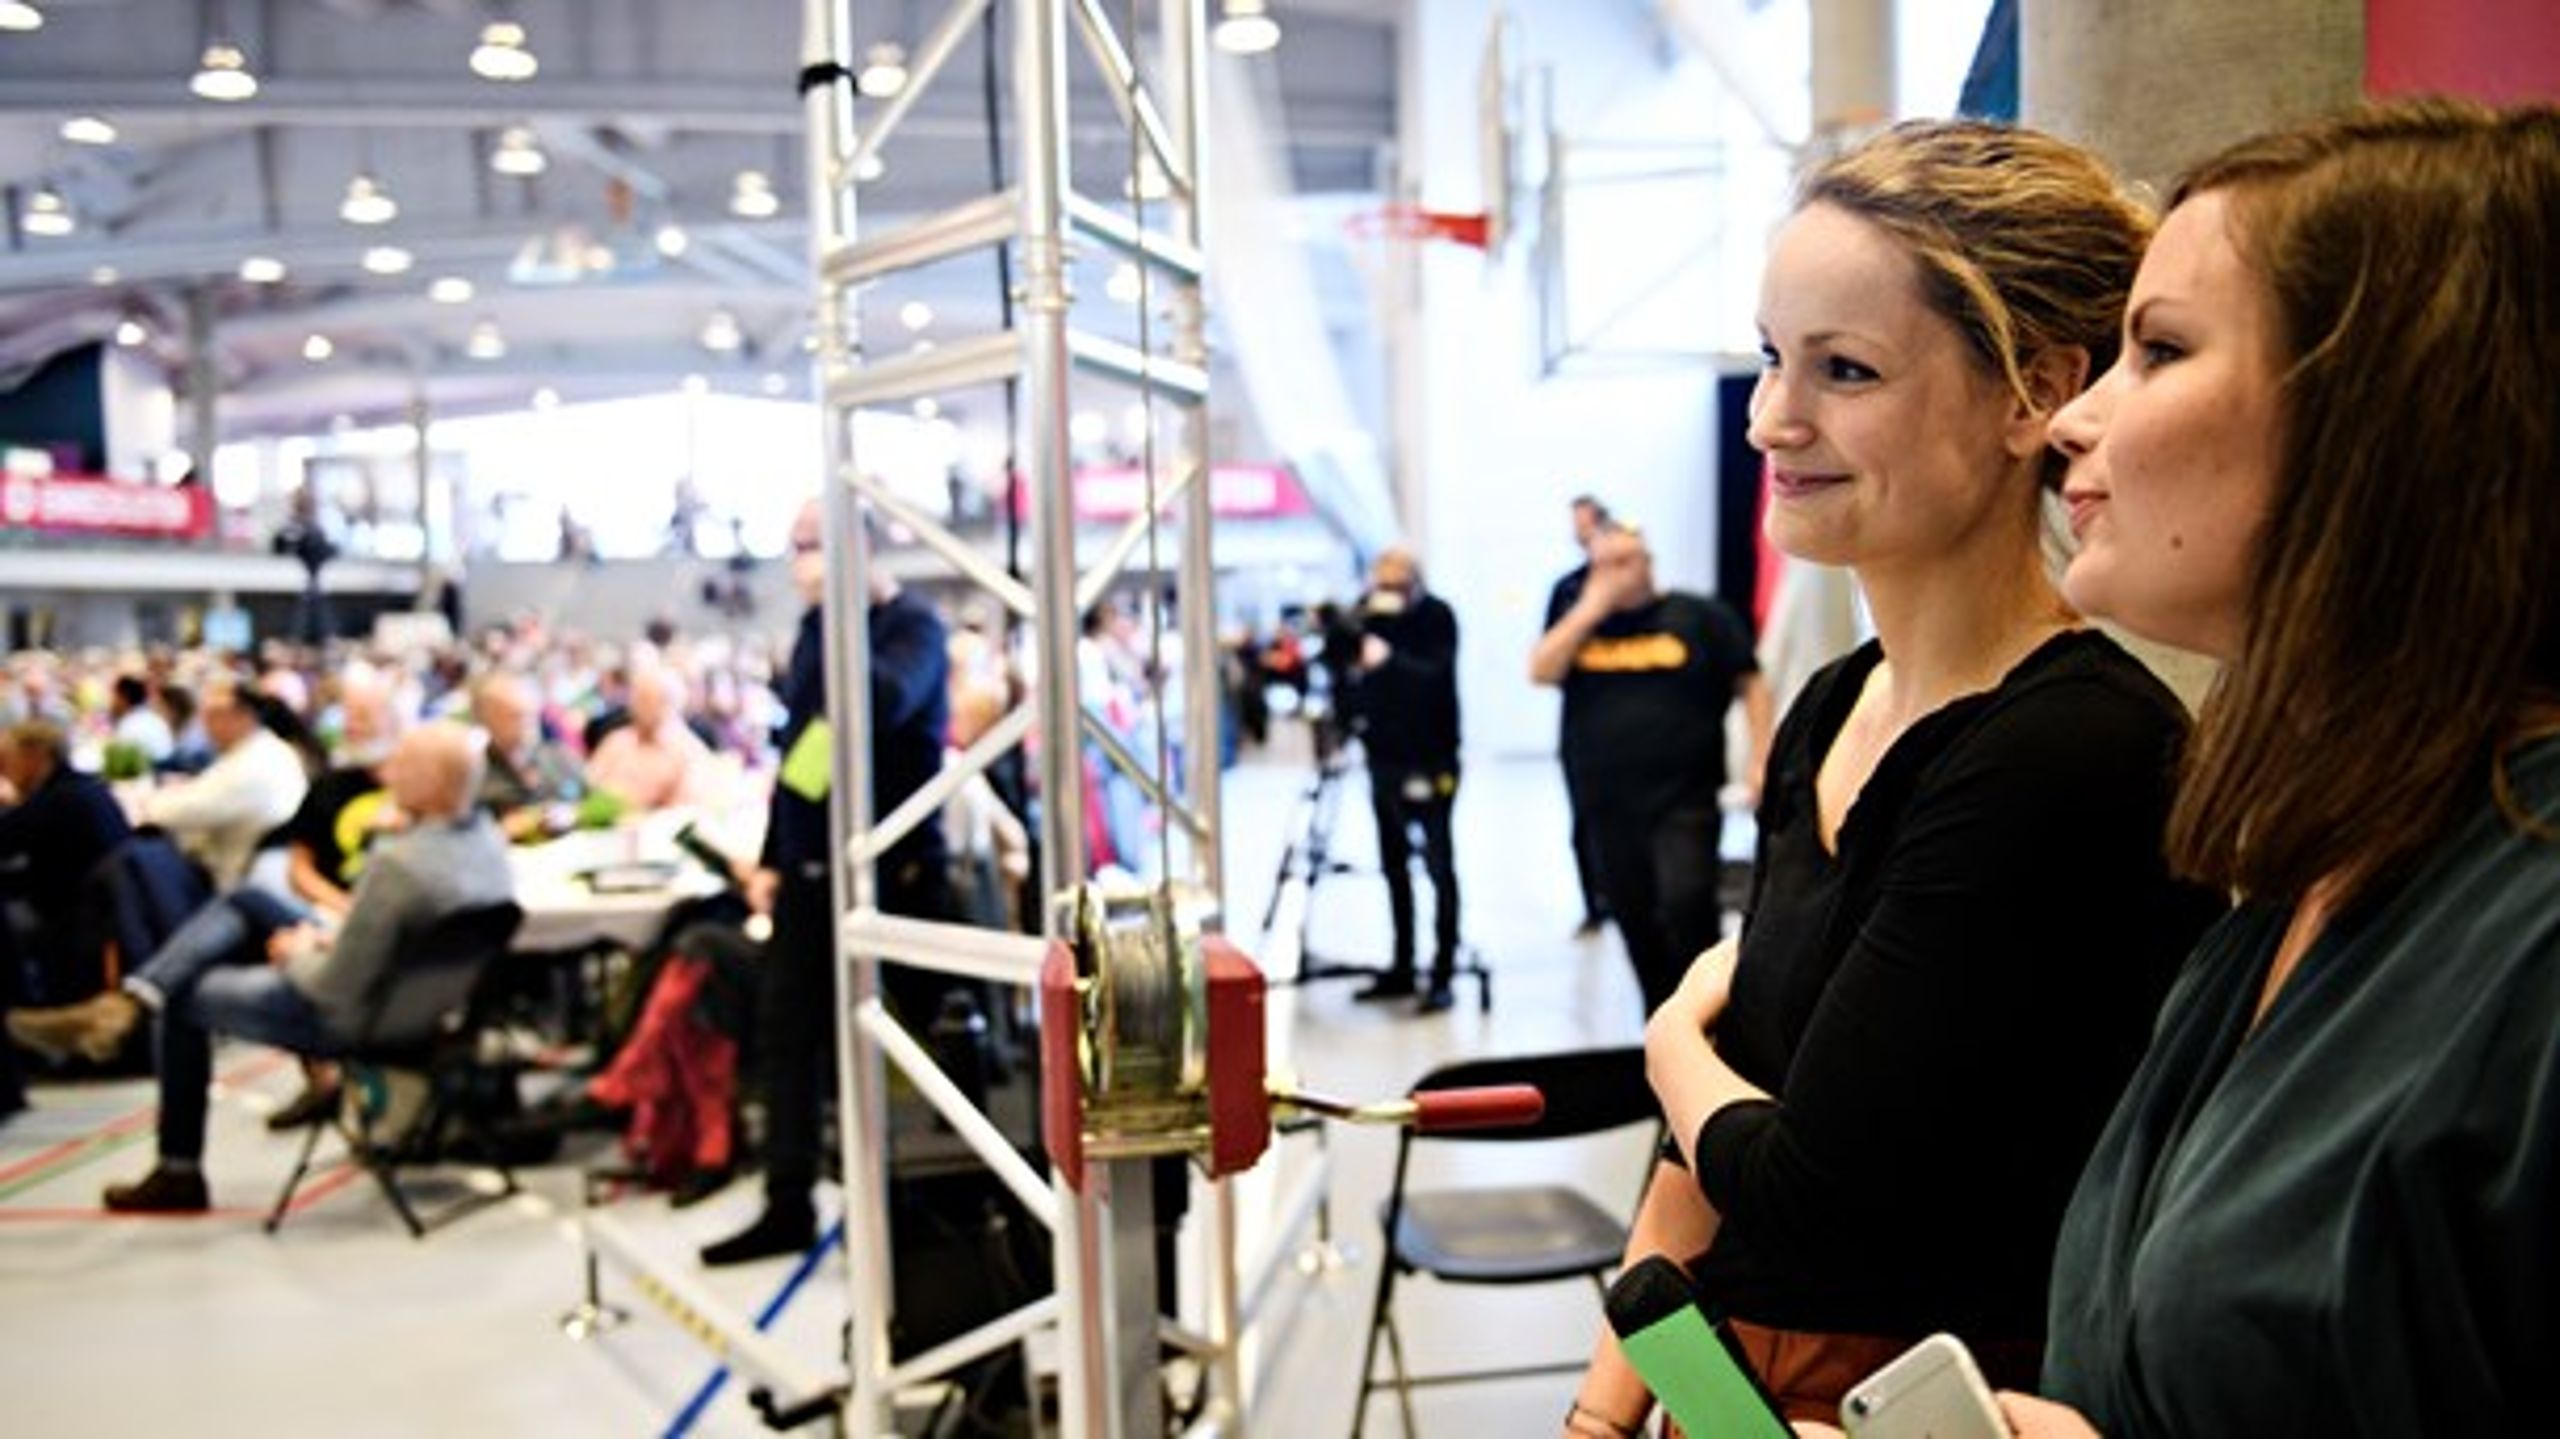 Mai Villadsen overtager Maria Gjerdings mandat som ny spidskandidat i Nordsjællands Storkreds. Her ses hun med partiets politiske ordfører, Pernille Skipper.